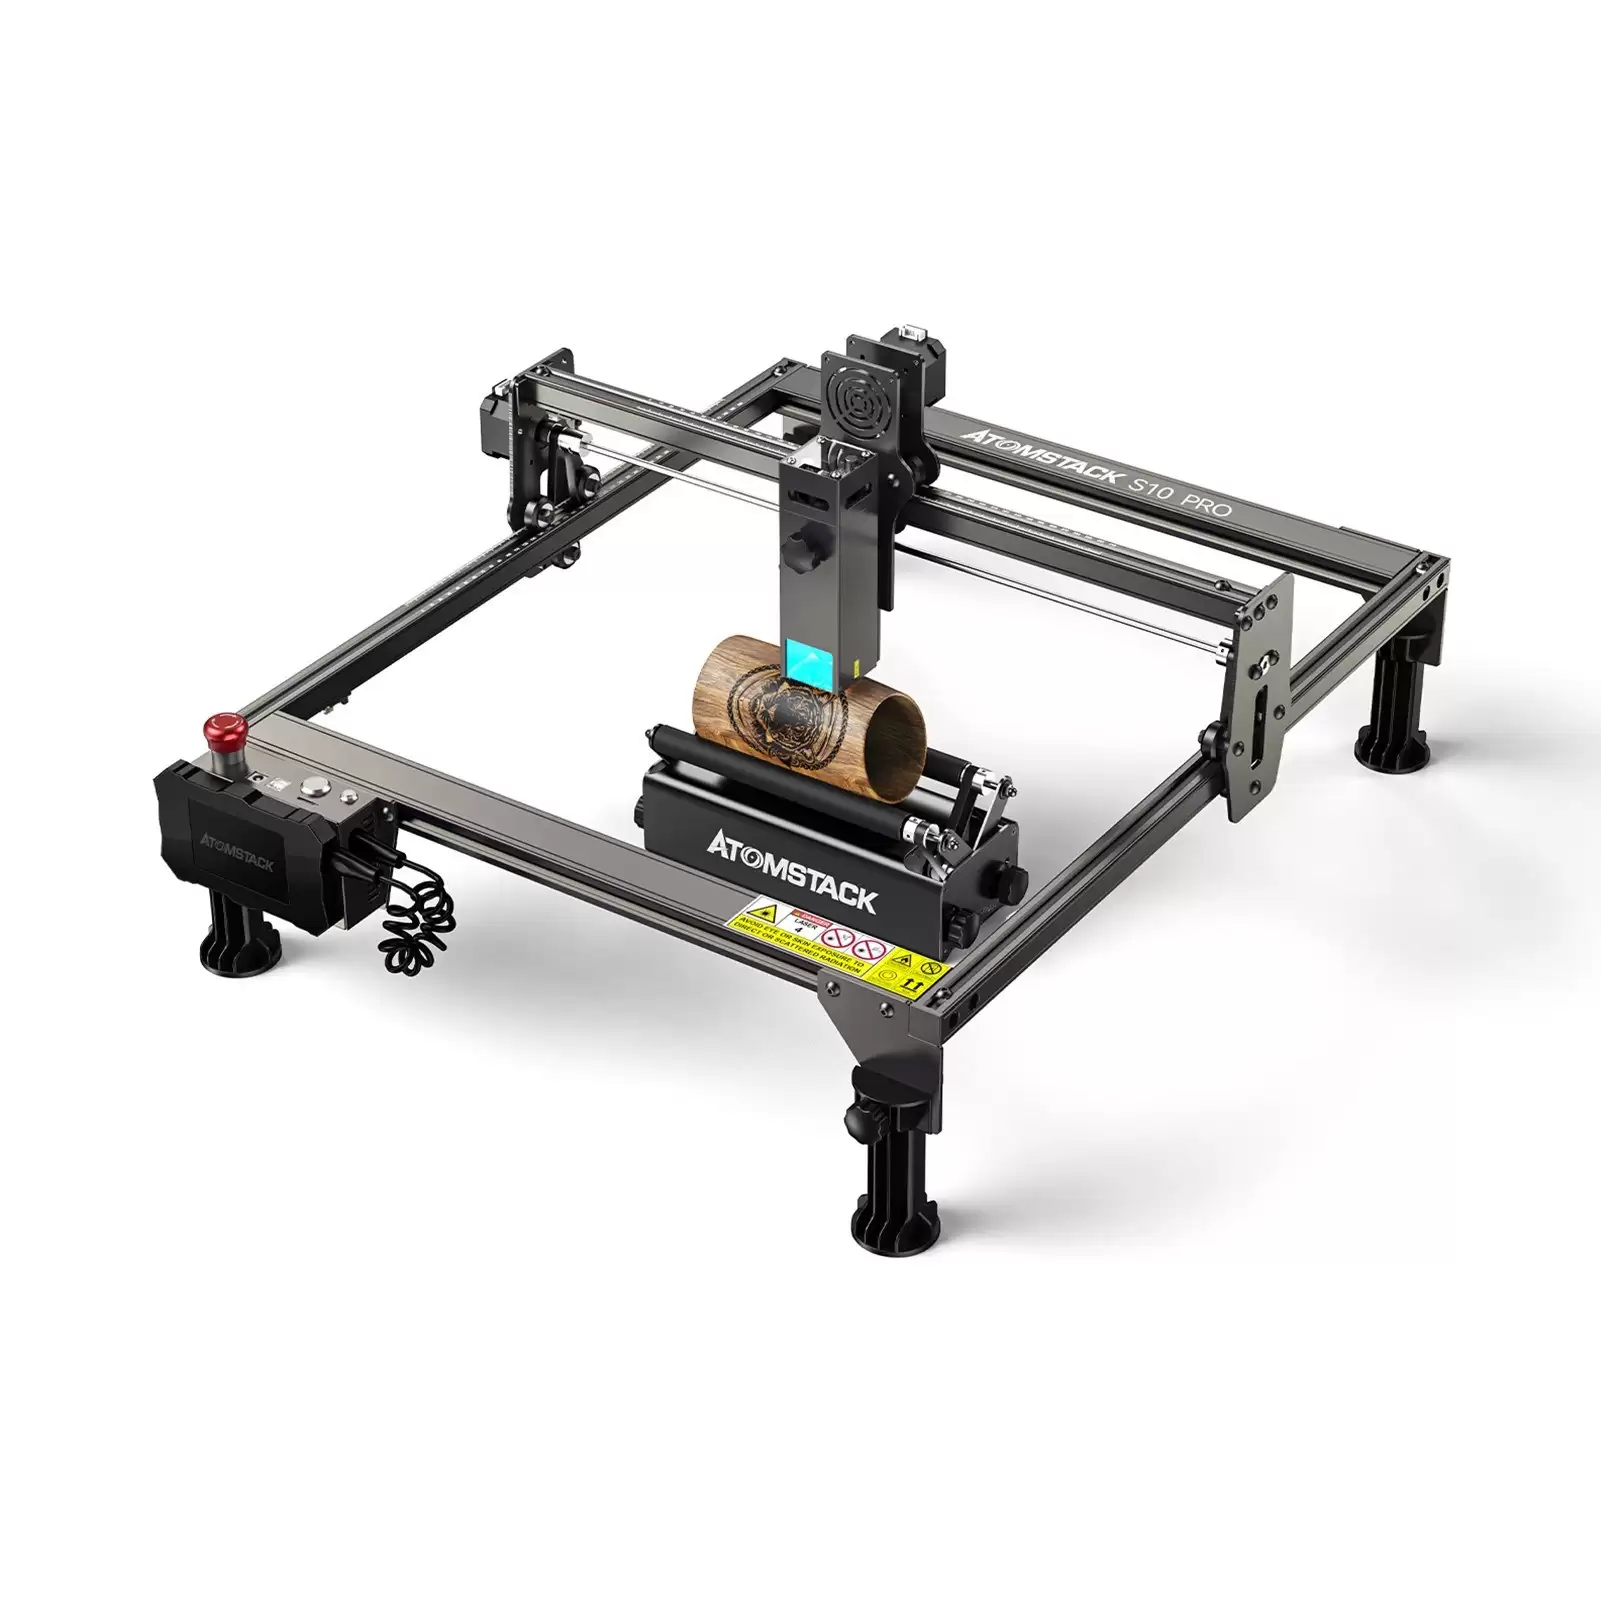 Order In Just $319.99 Atomstack S10 Pro 10w Cnc Desktop Diy Laser Engraving Cutting Machine